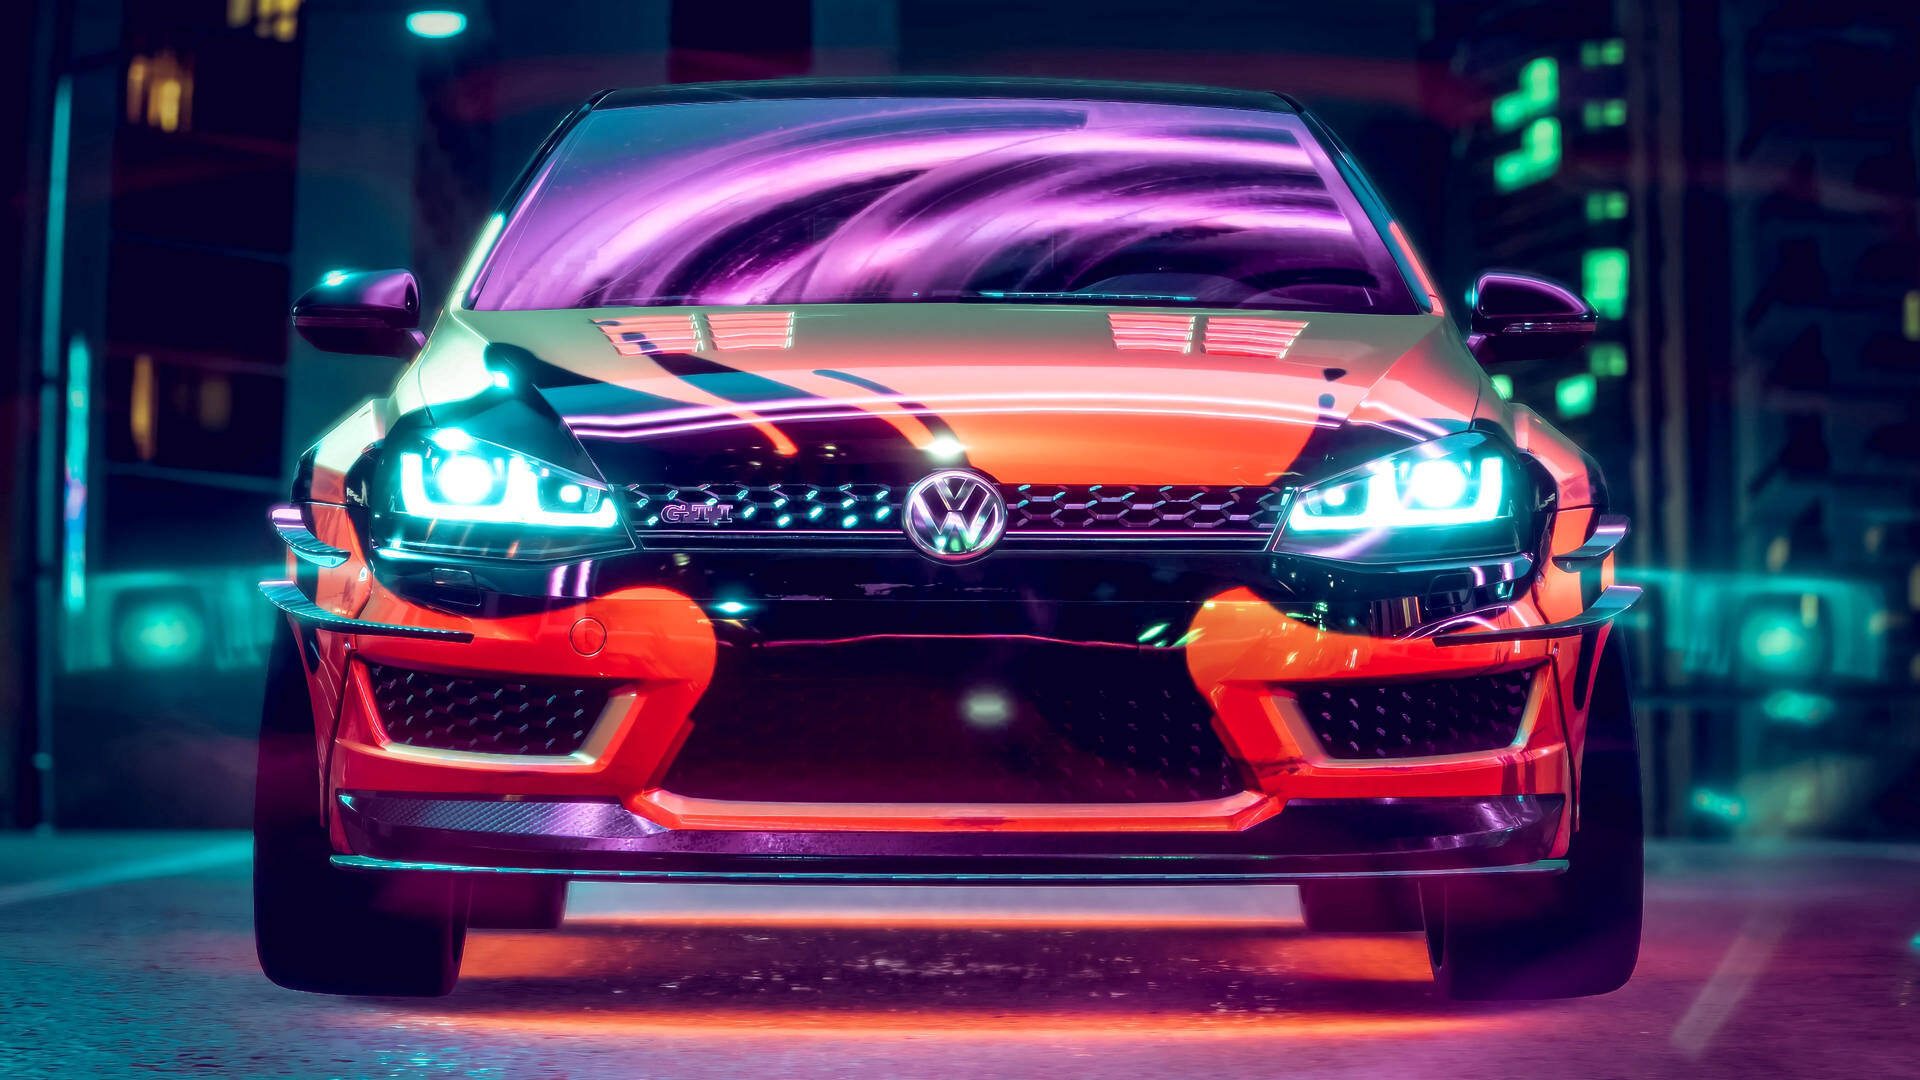 Customized Volkswagen Golf Gti Under The Neon Lights Wallpaper